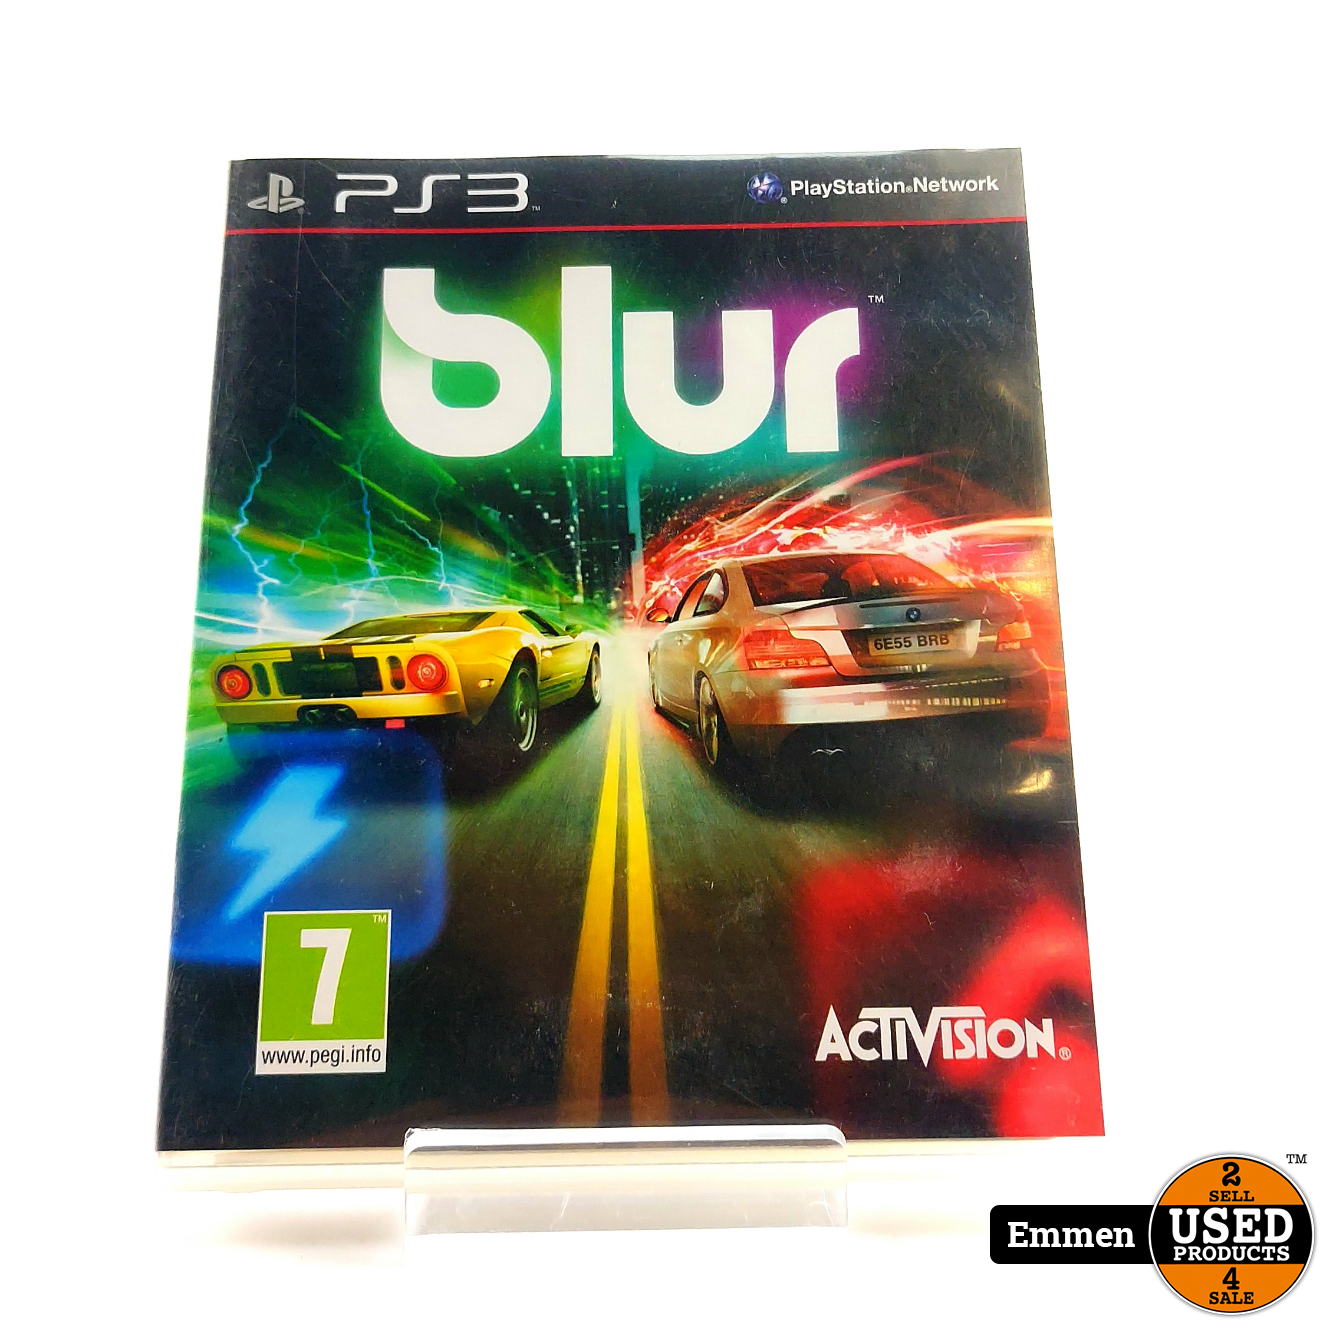 Handelsmerk mechanisch Prooi Playstation 3 Game: Blur - Used Products Emmen